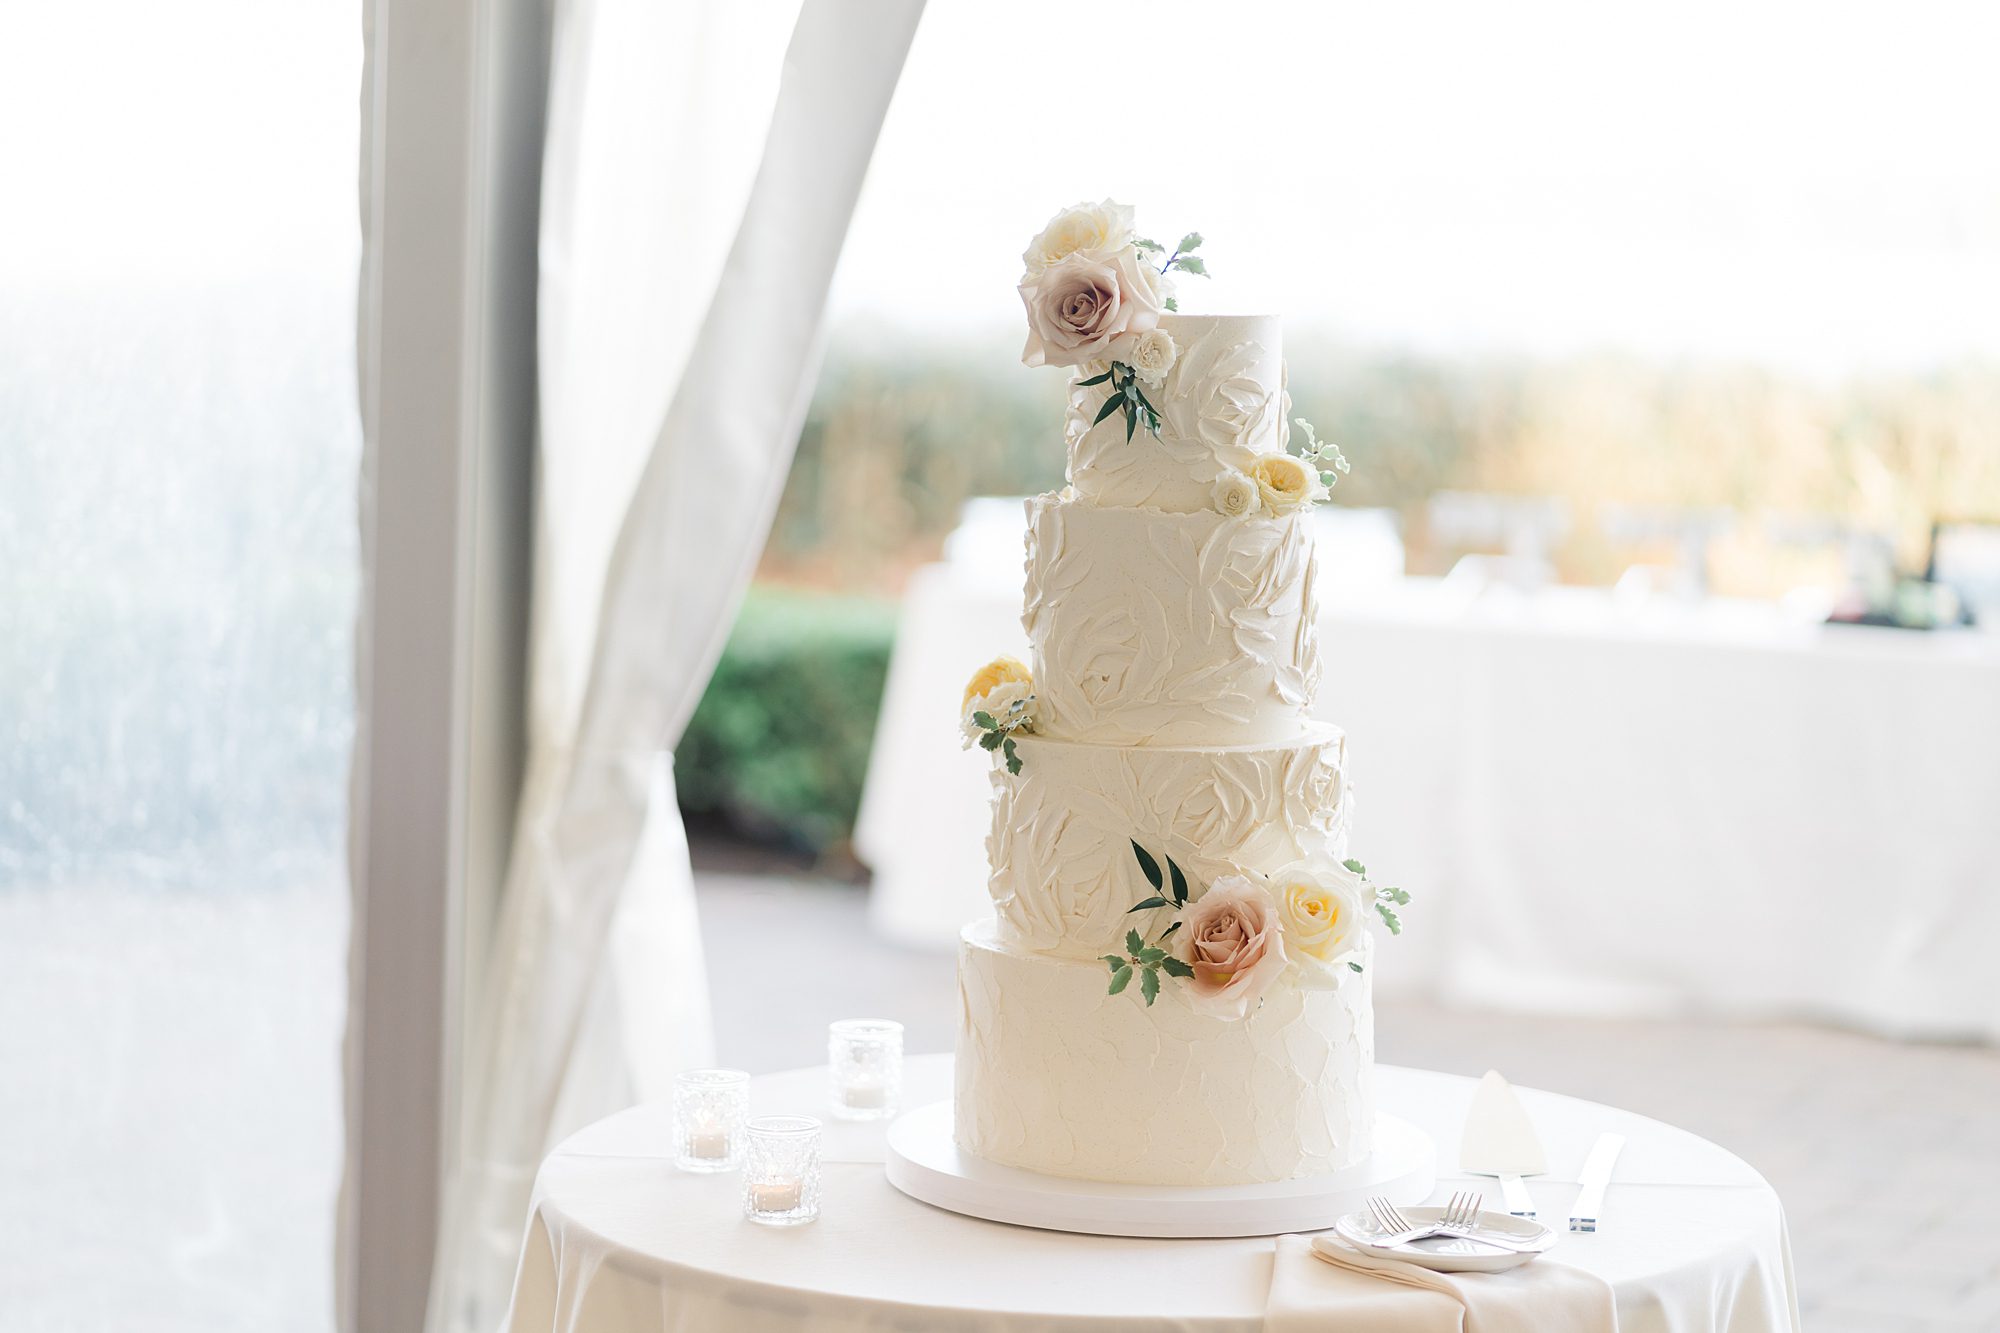 4 tiered wedding cake from Chic Garden Wedding at Glen Foerd on the Delaware